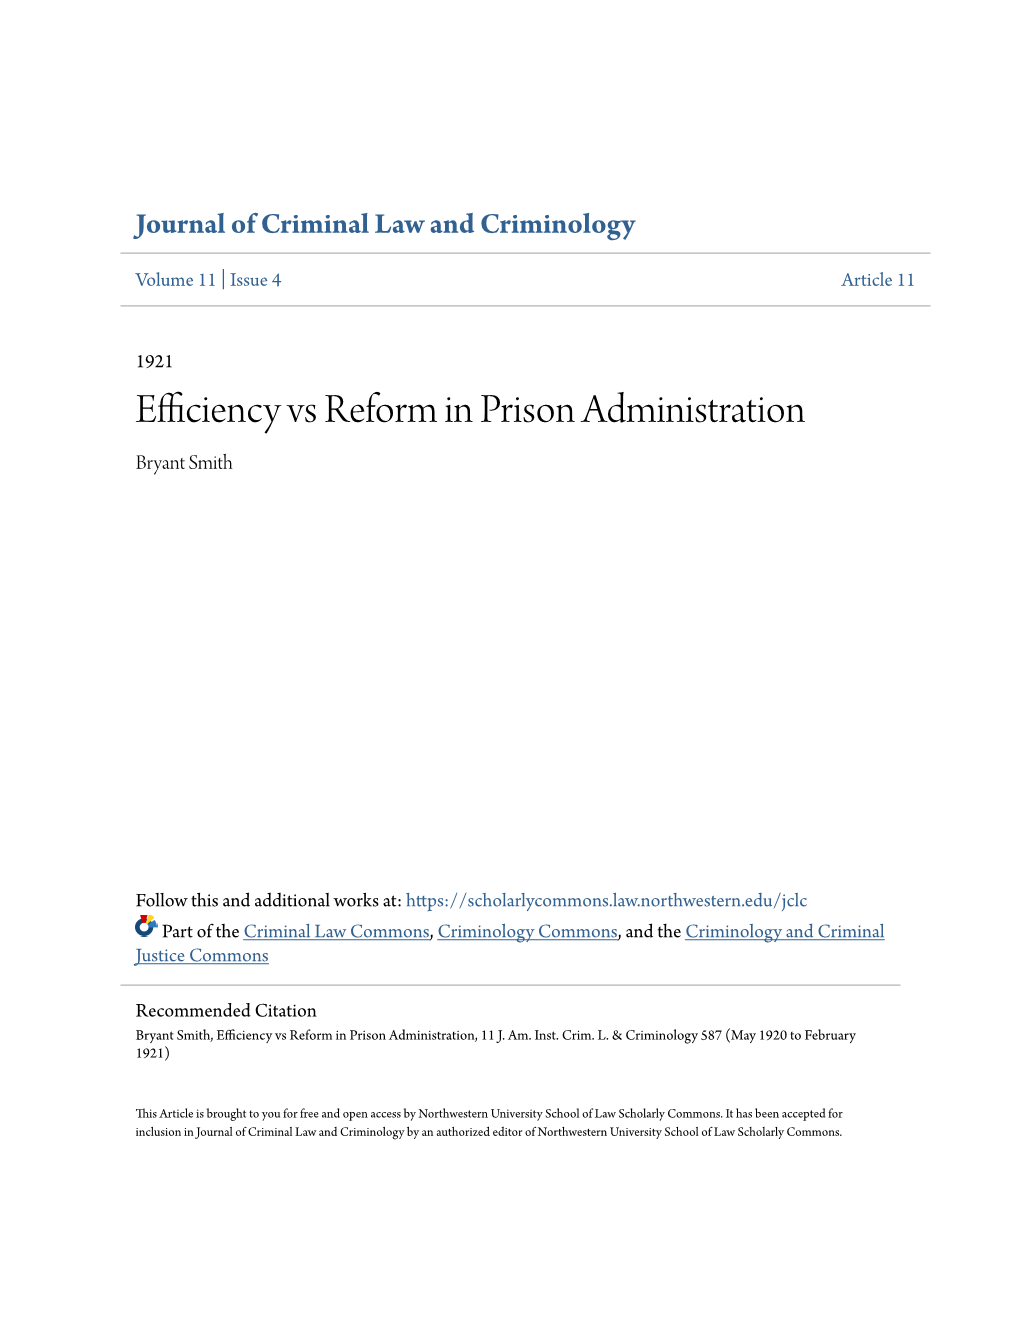 Efficiency Vs Reform in Prison Administration Bryant Smith